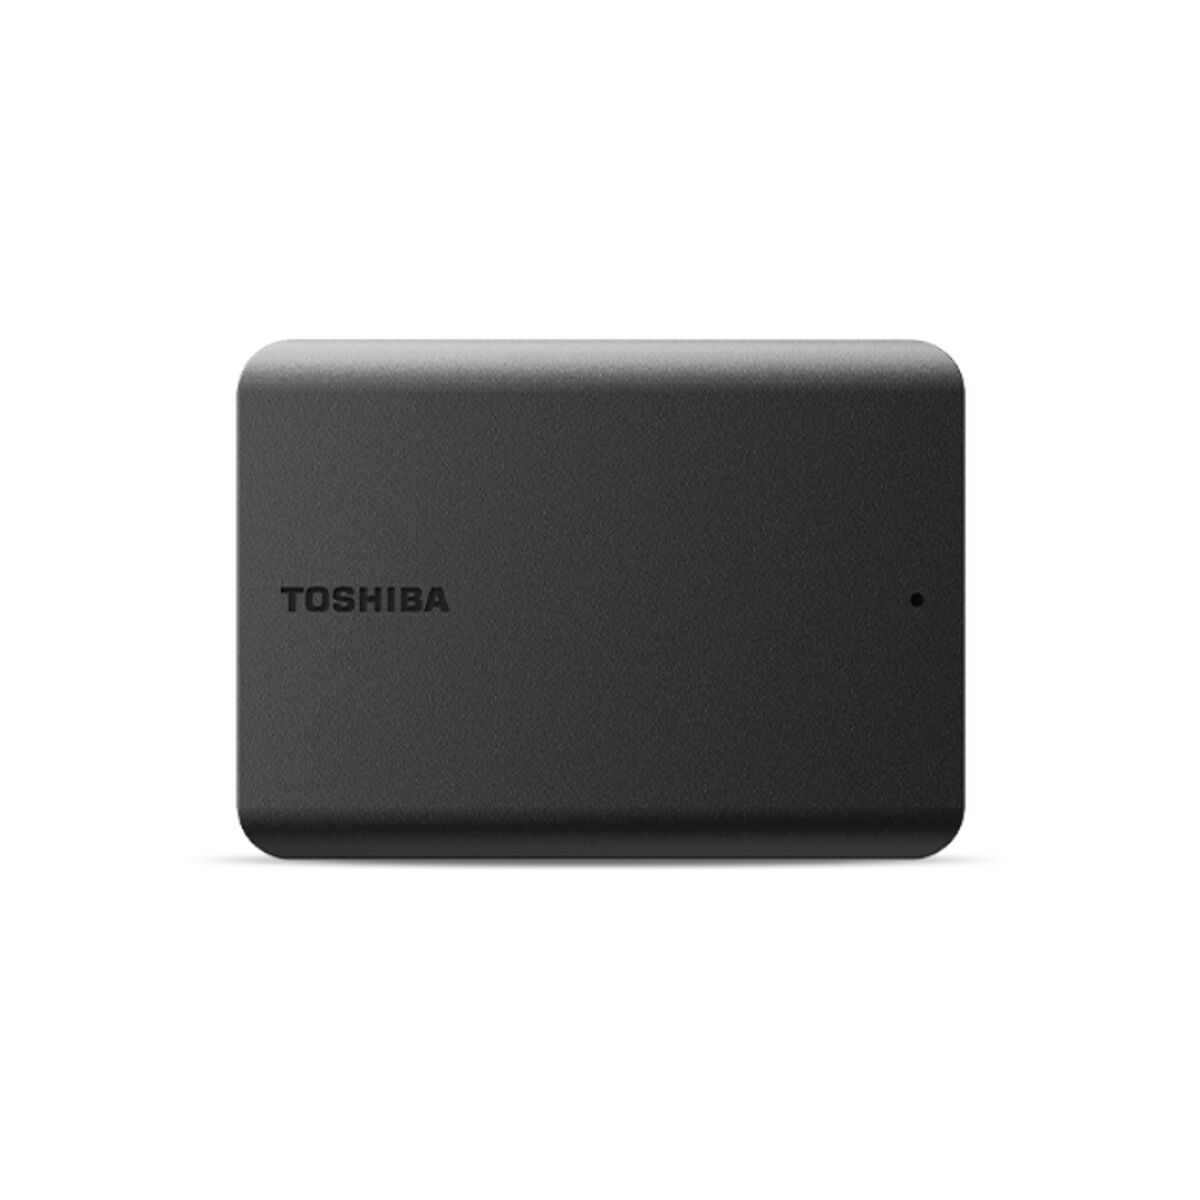 External Hard Drive Toshiba BASIC 1 TB SSD